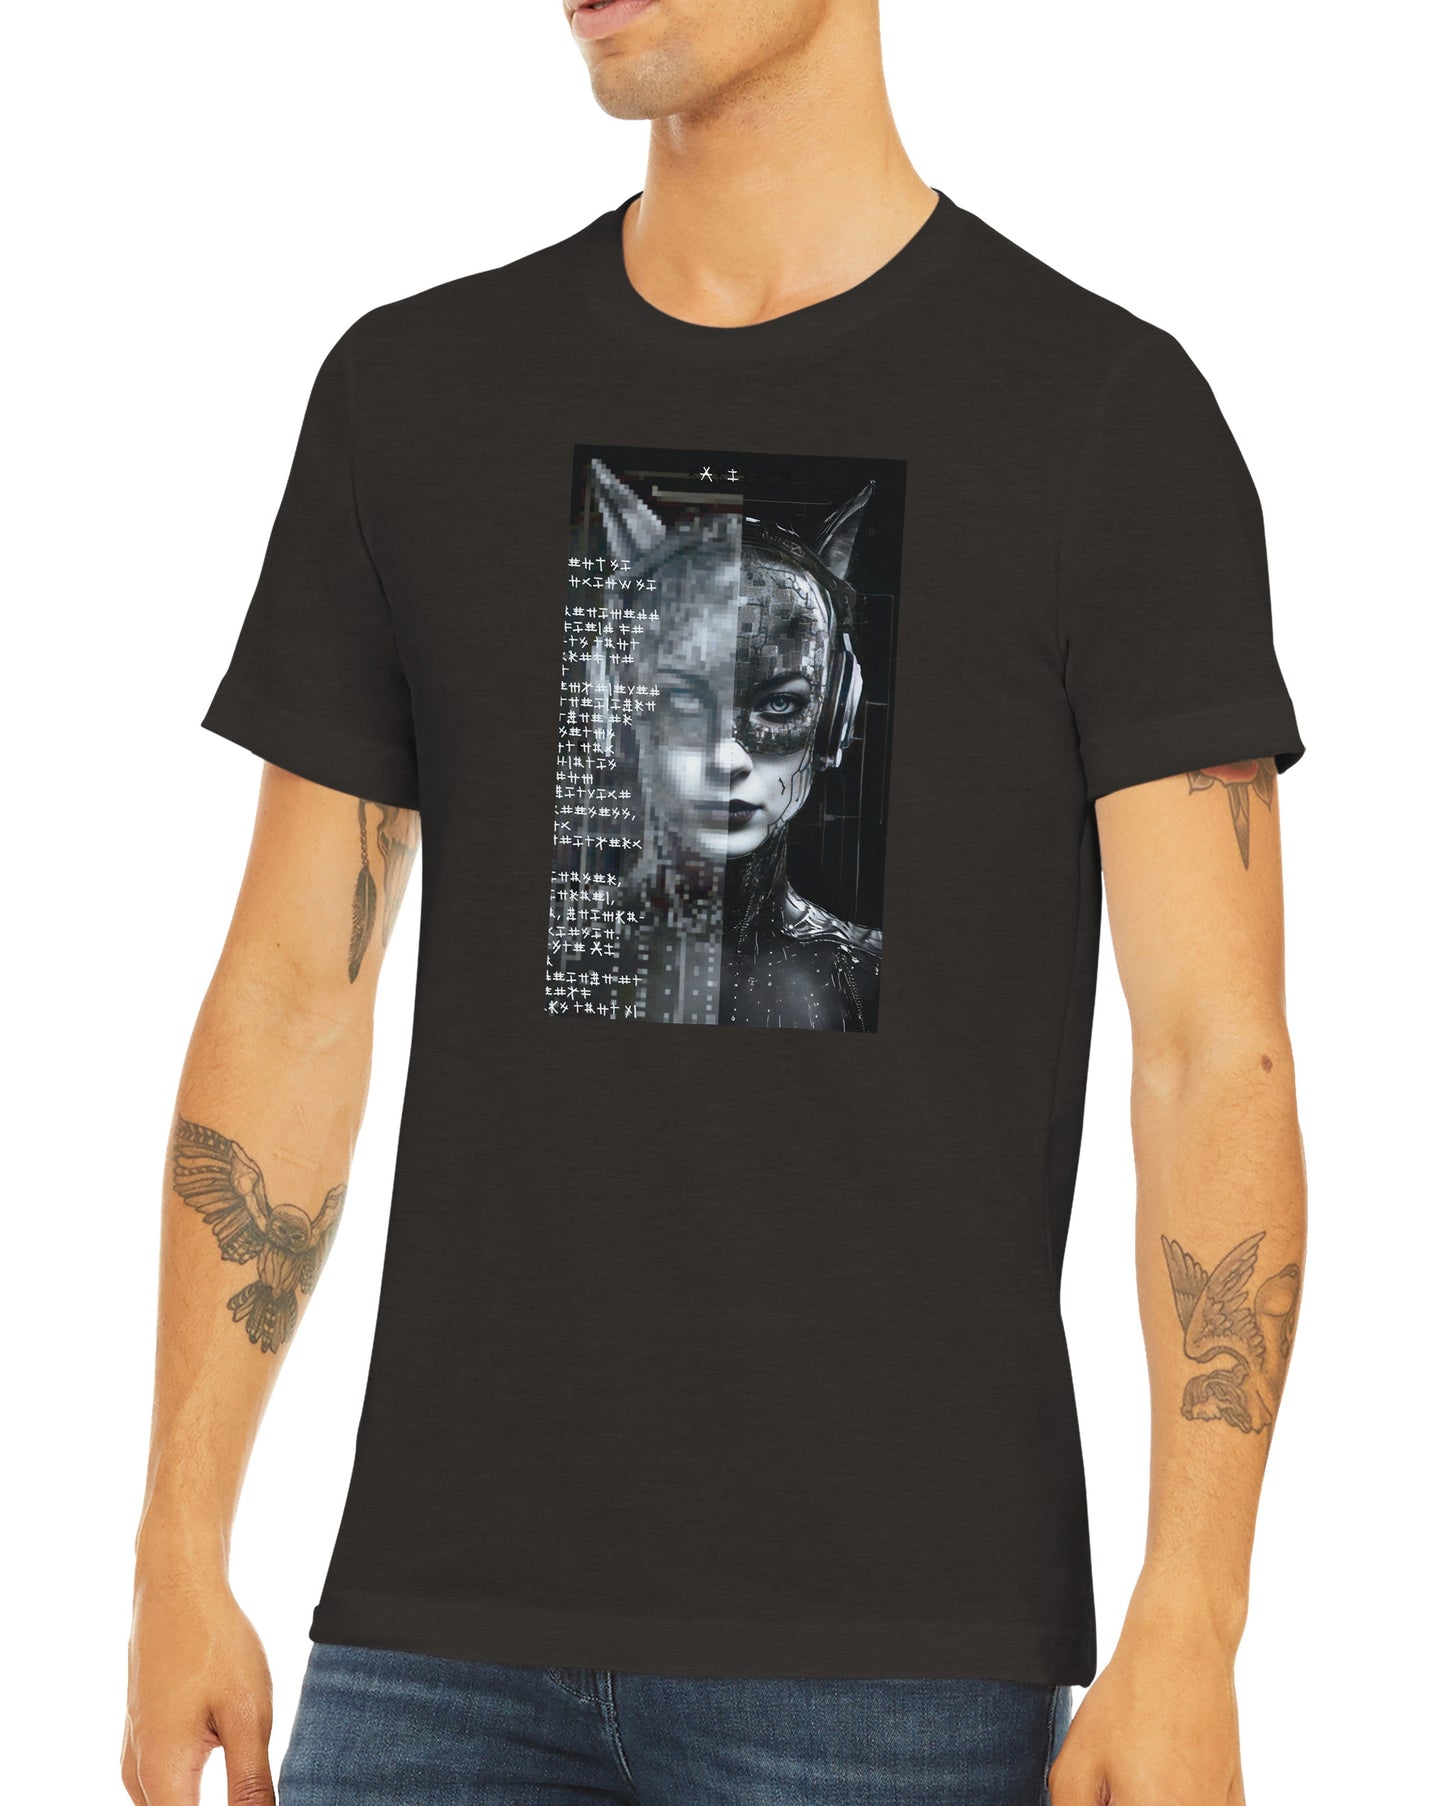 CAT WOMAN 2050 Unisex Triblend T-Shirt